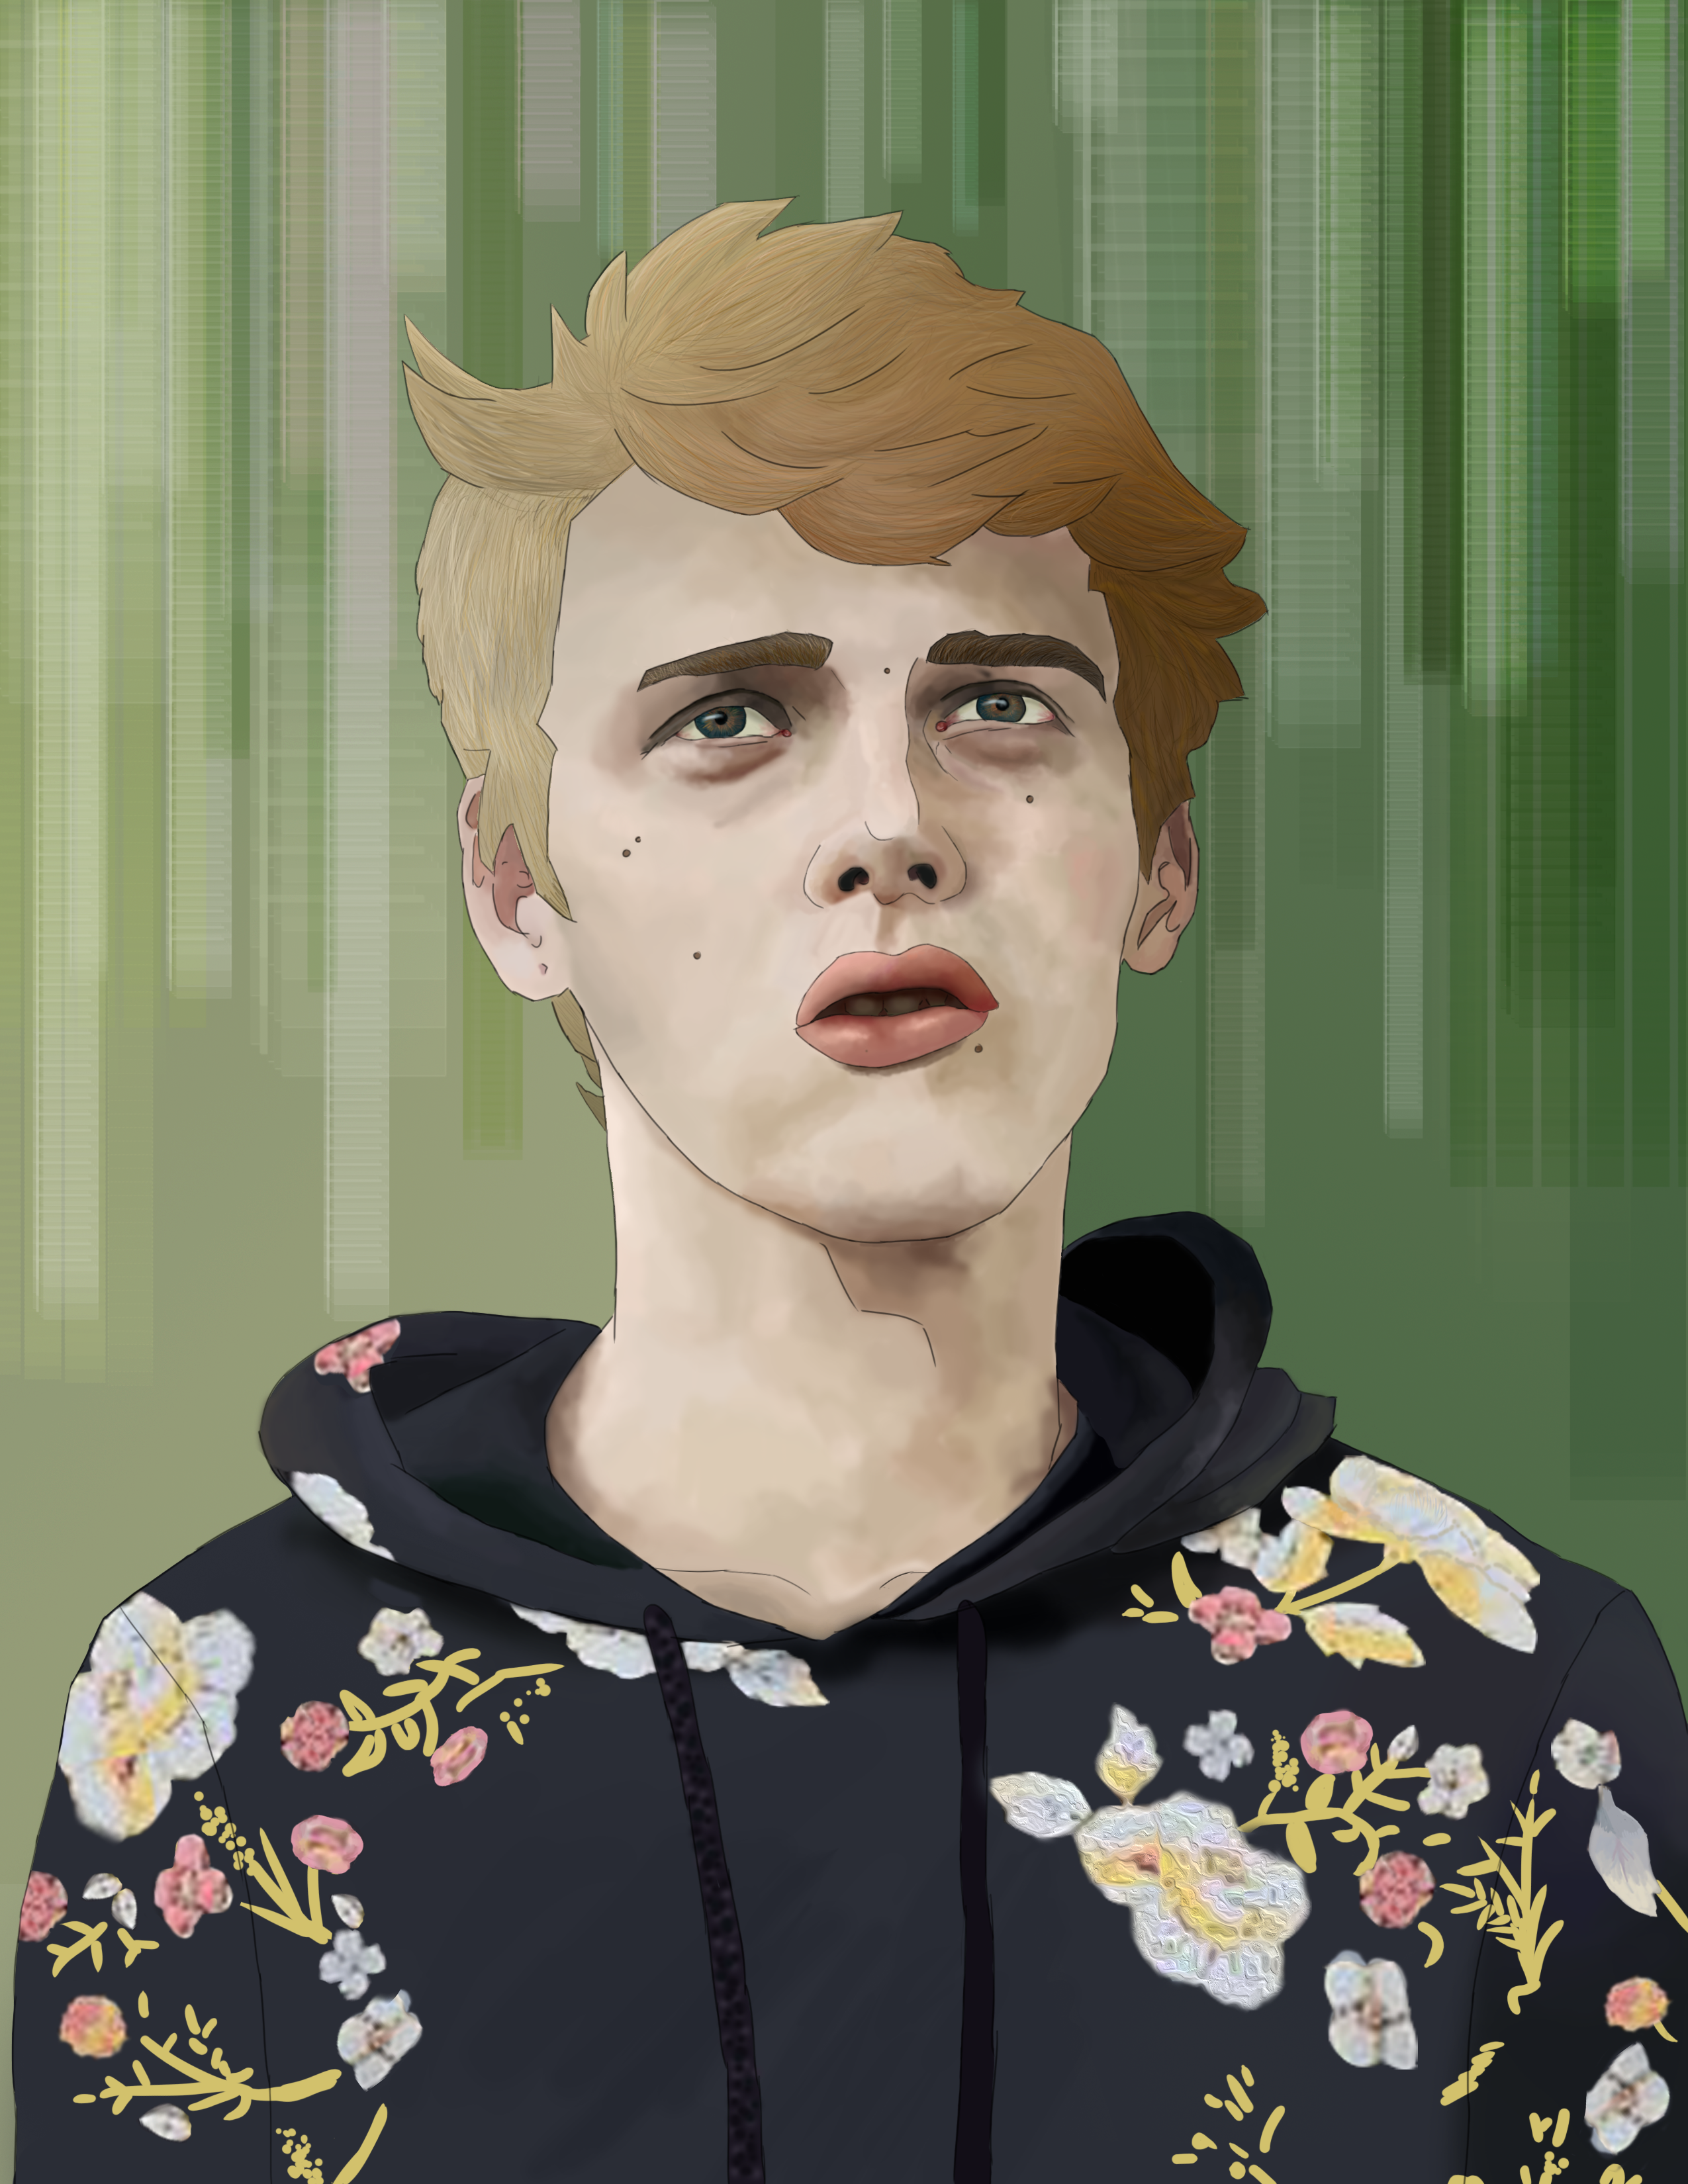 A digital painting of a boy